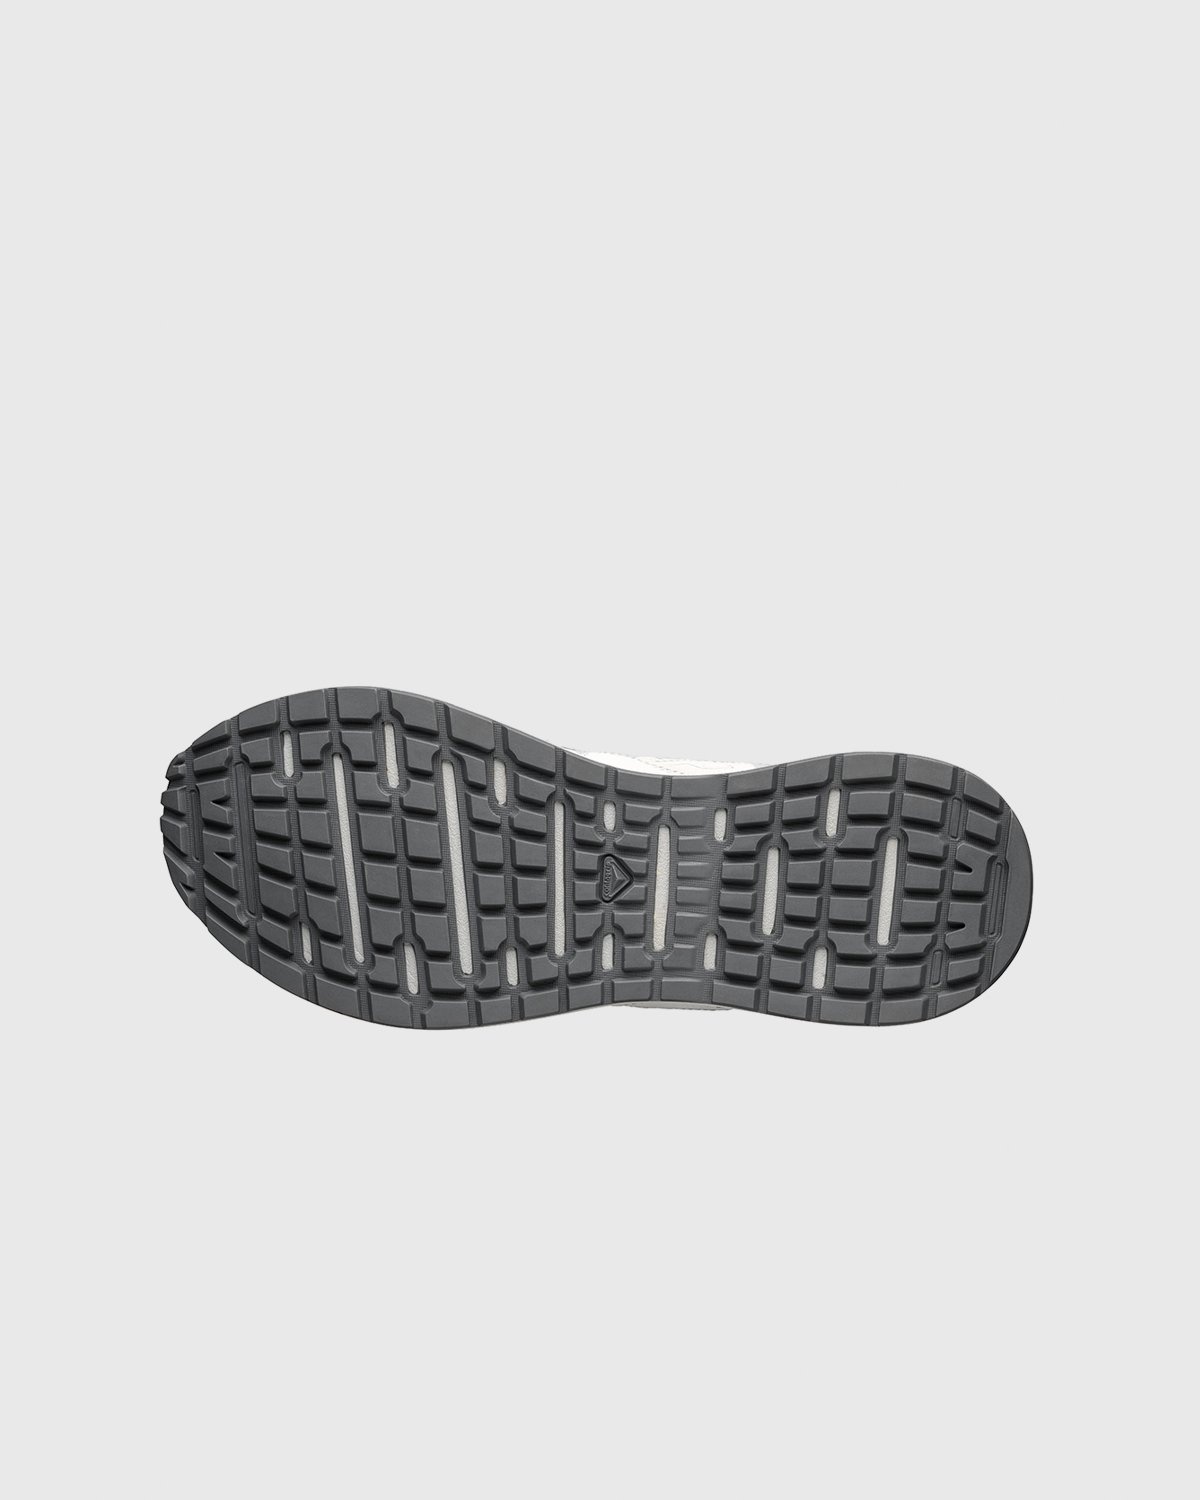 Salomon – Odyssey 1 Advanced Grey - Low Top Sneakers - Grey - Image 5